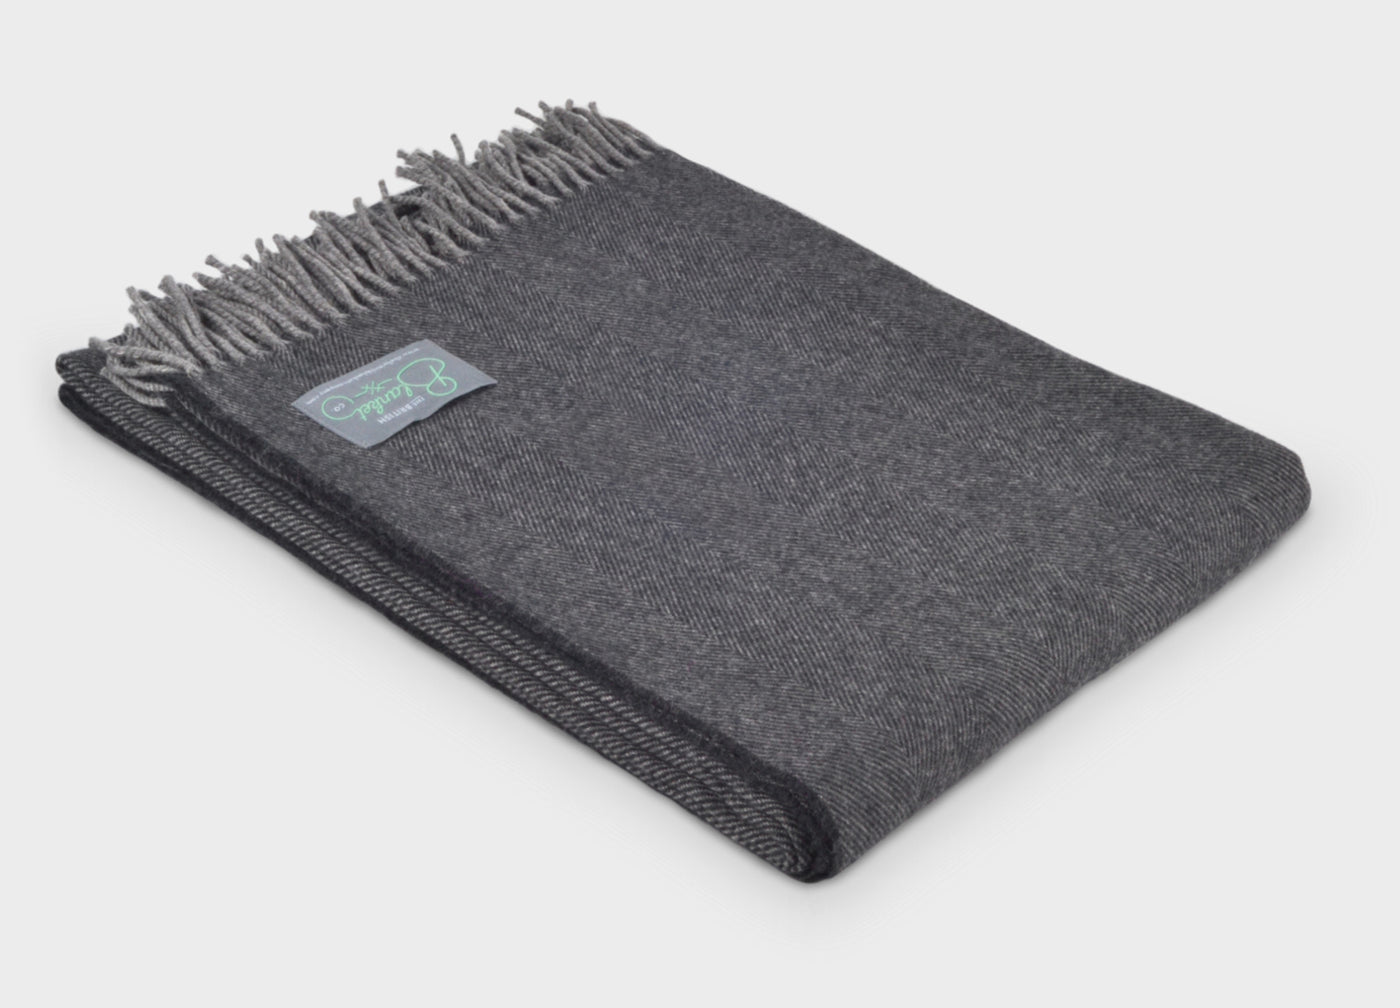 Folded grey merino herringbone wool throw by The British Blanket Company.